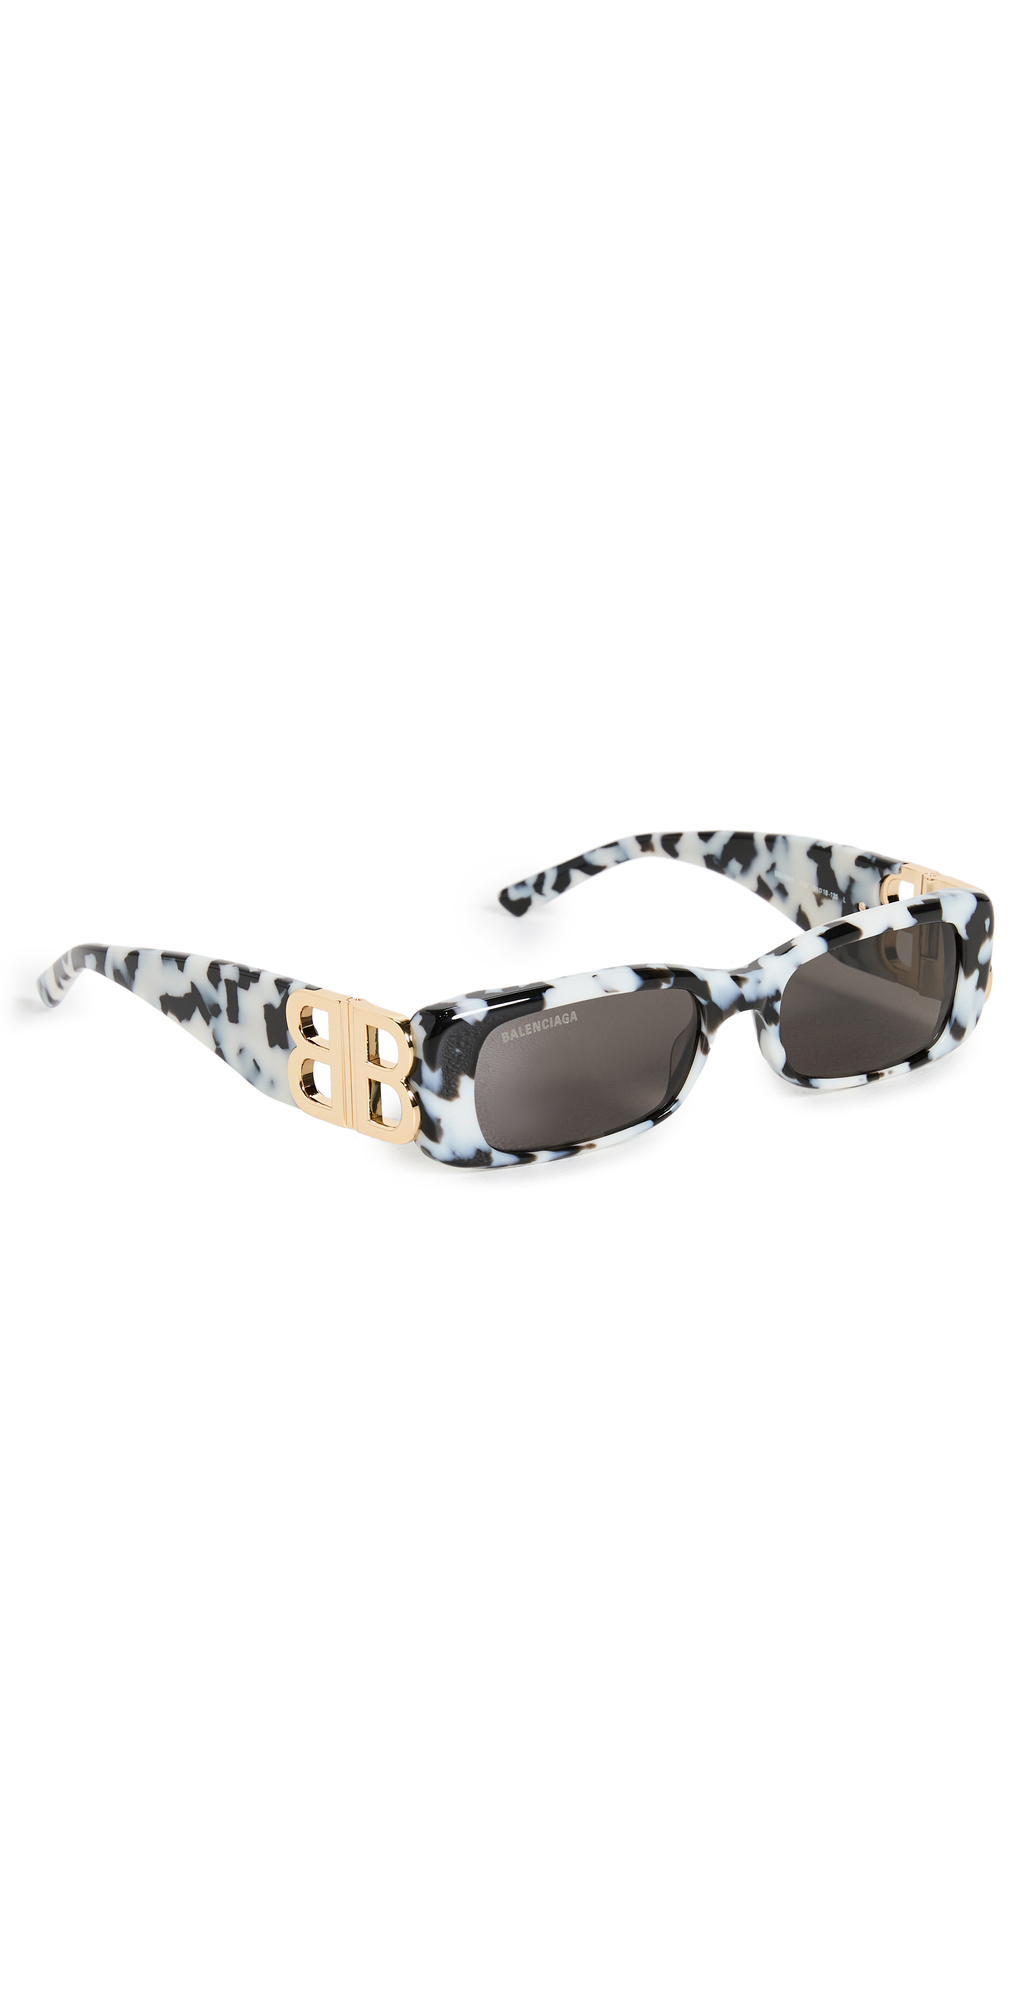 Balenciaga Dynasty Sunglasses in black / white